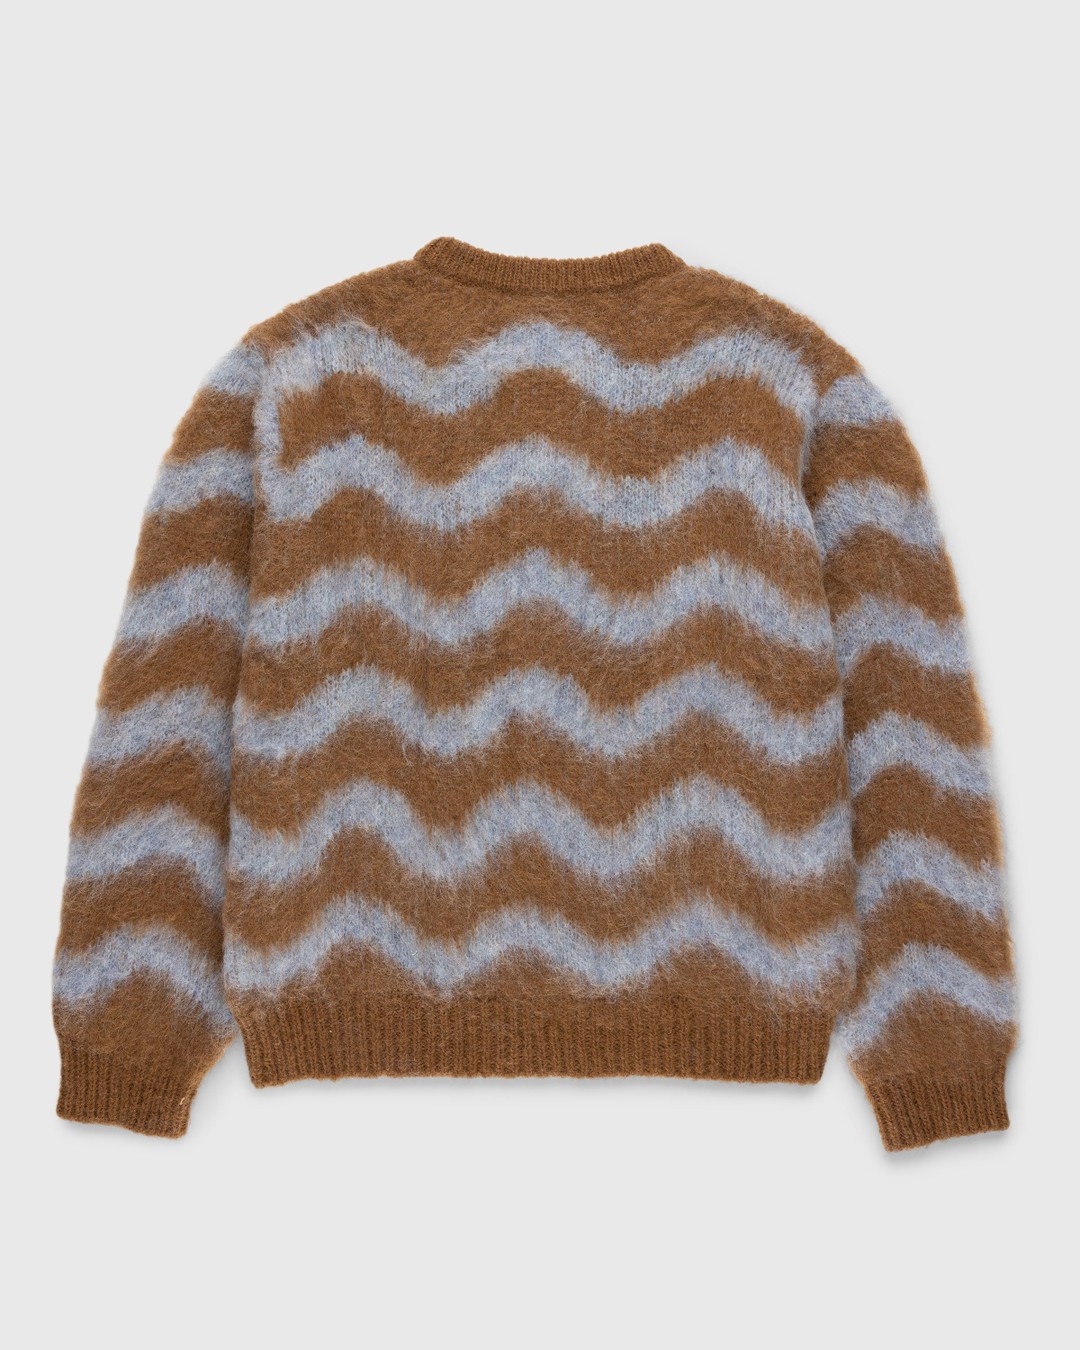 Highsnobiety HS05 – Alpaca Fuzzy Wave Sweater Light Blue/Brown - Knitwear - Multi - Image 2